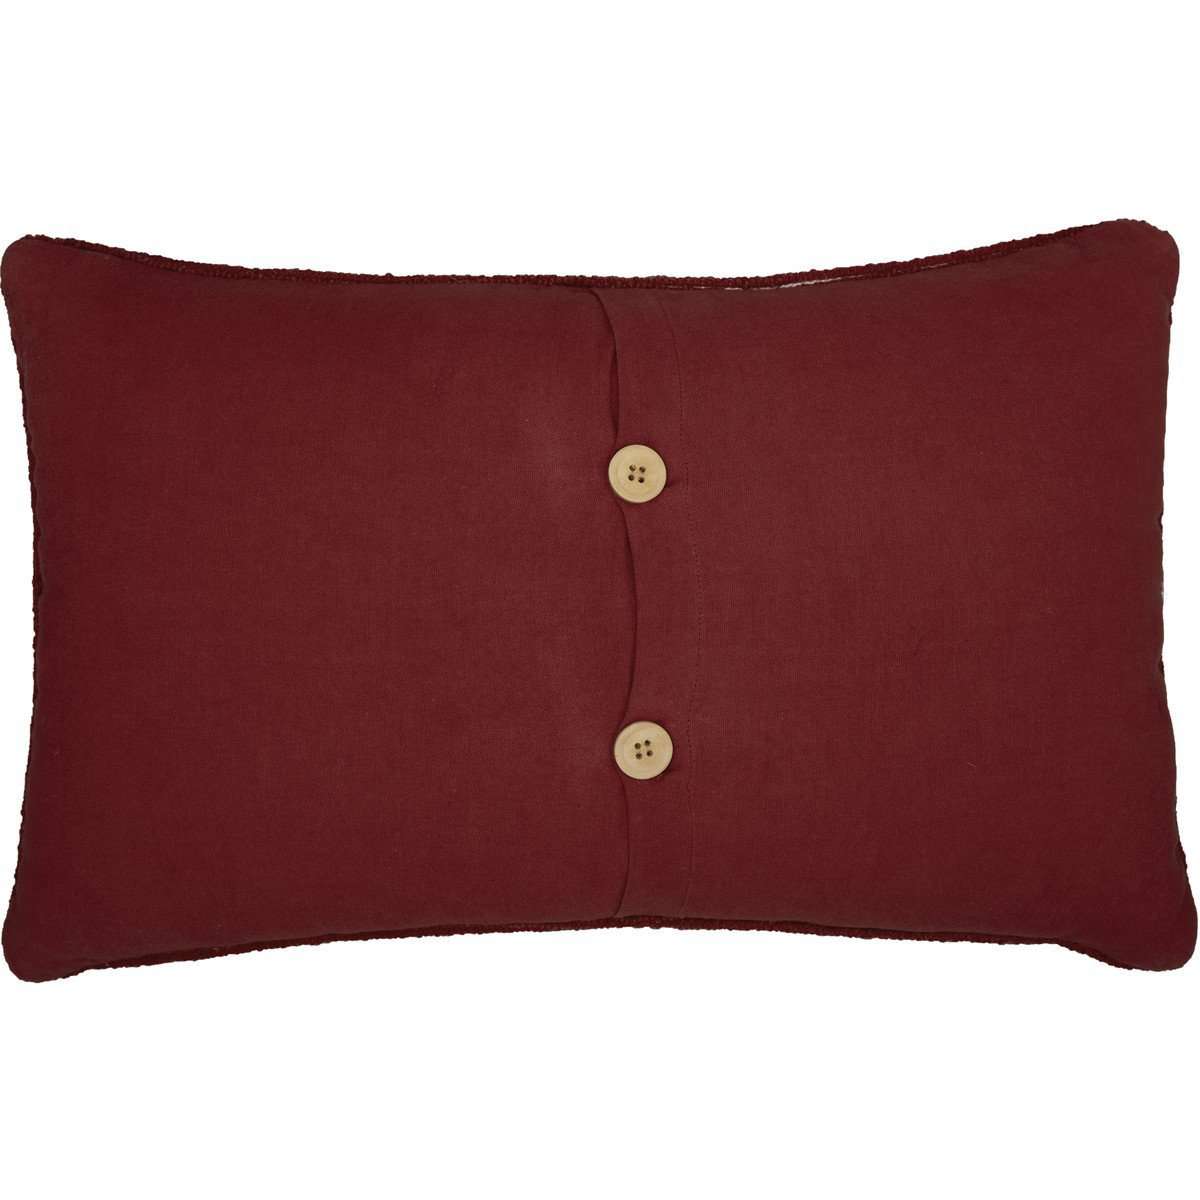 Wyatt Bear Hooked Pillow 14"x22" - The Fox Decor